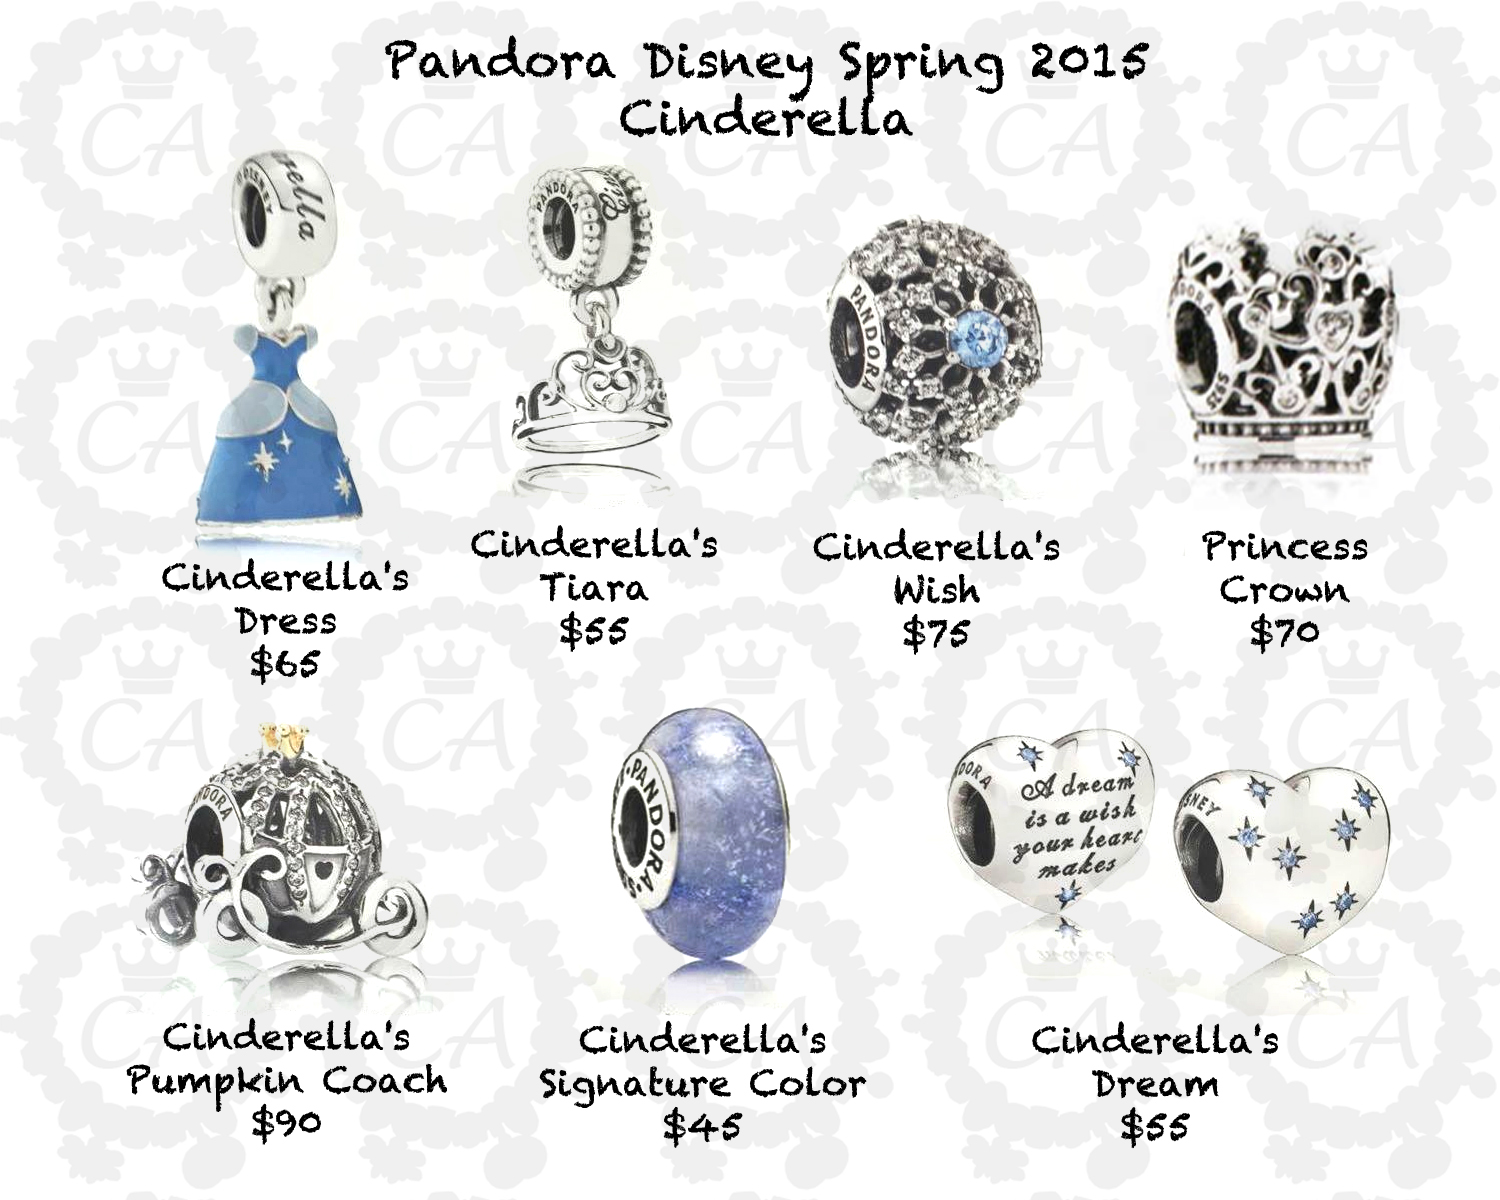 pandora-disney-spring-2015-cinderella-prices